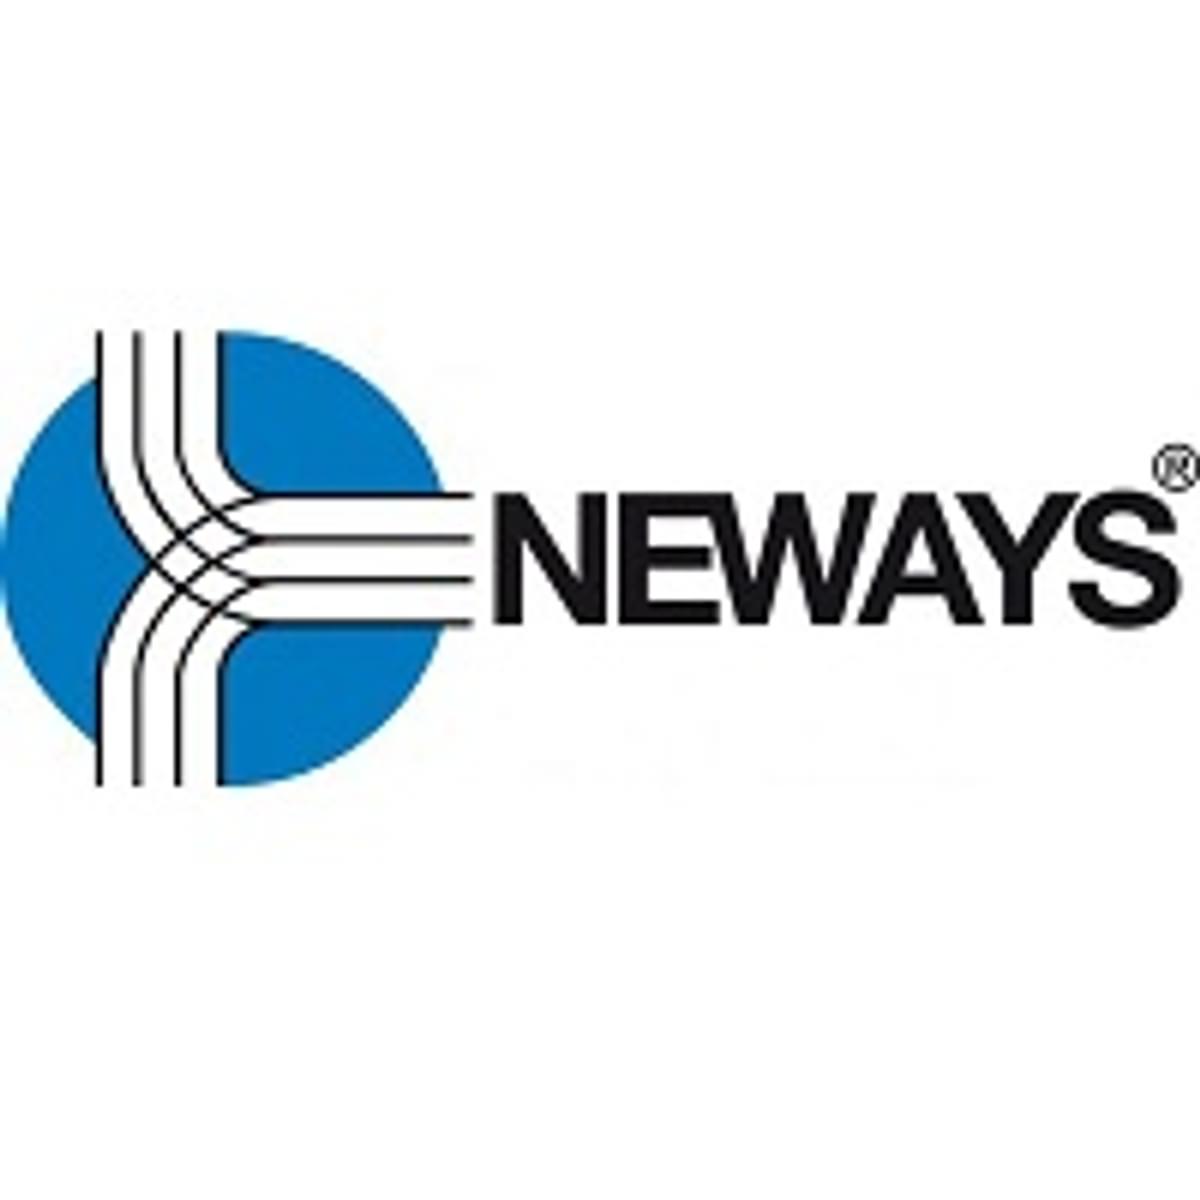 Neways Electronics kiest voor HR oplossing Salure en AFAS image